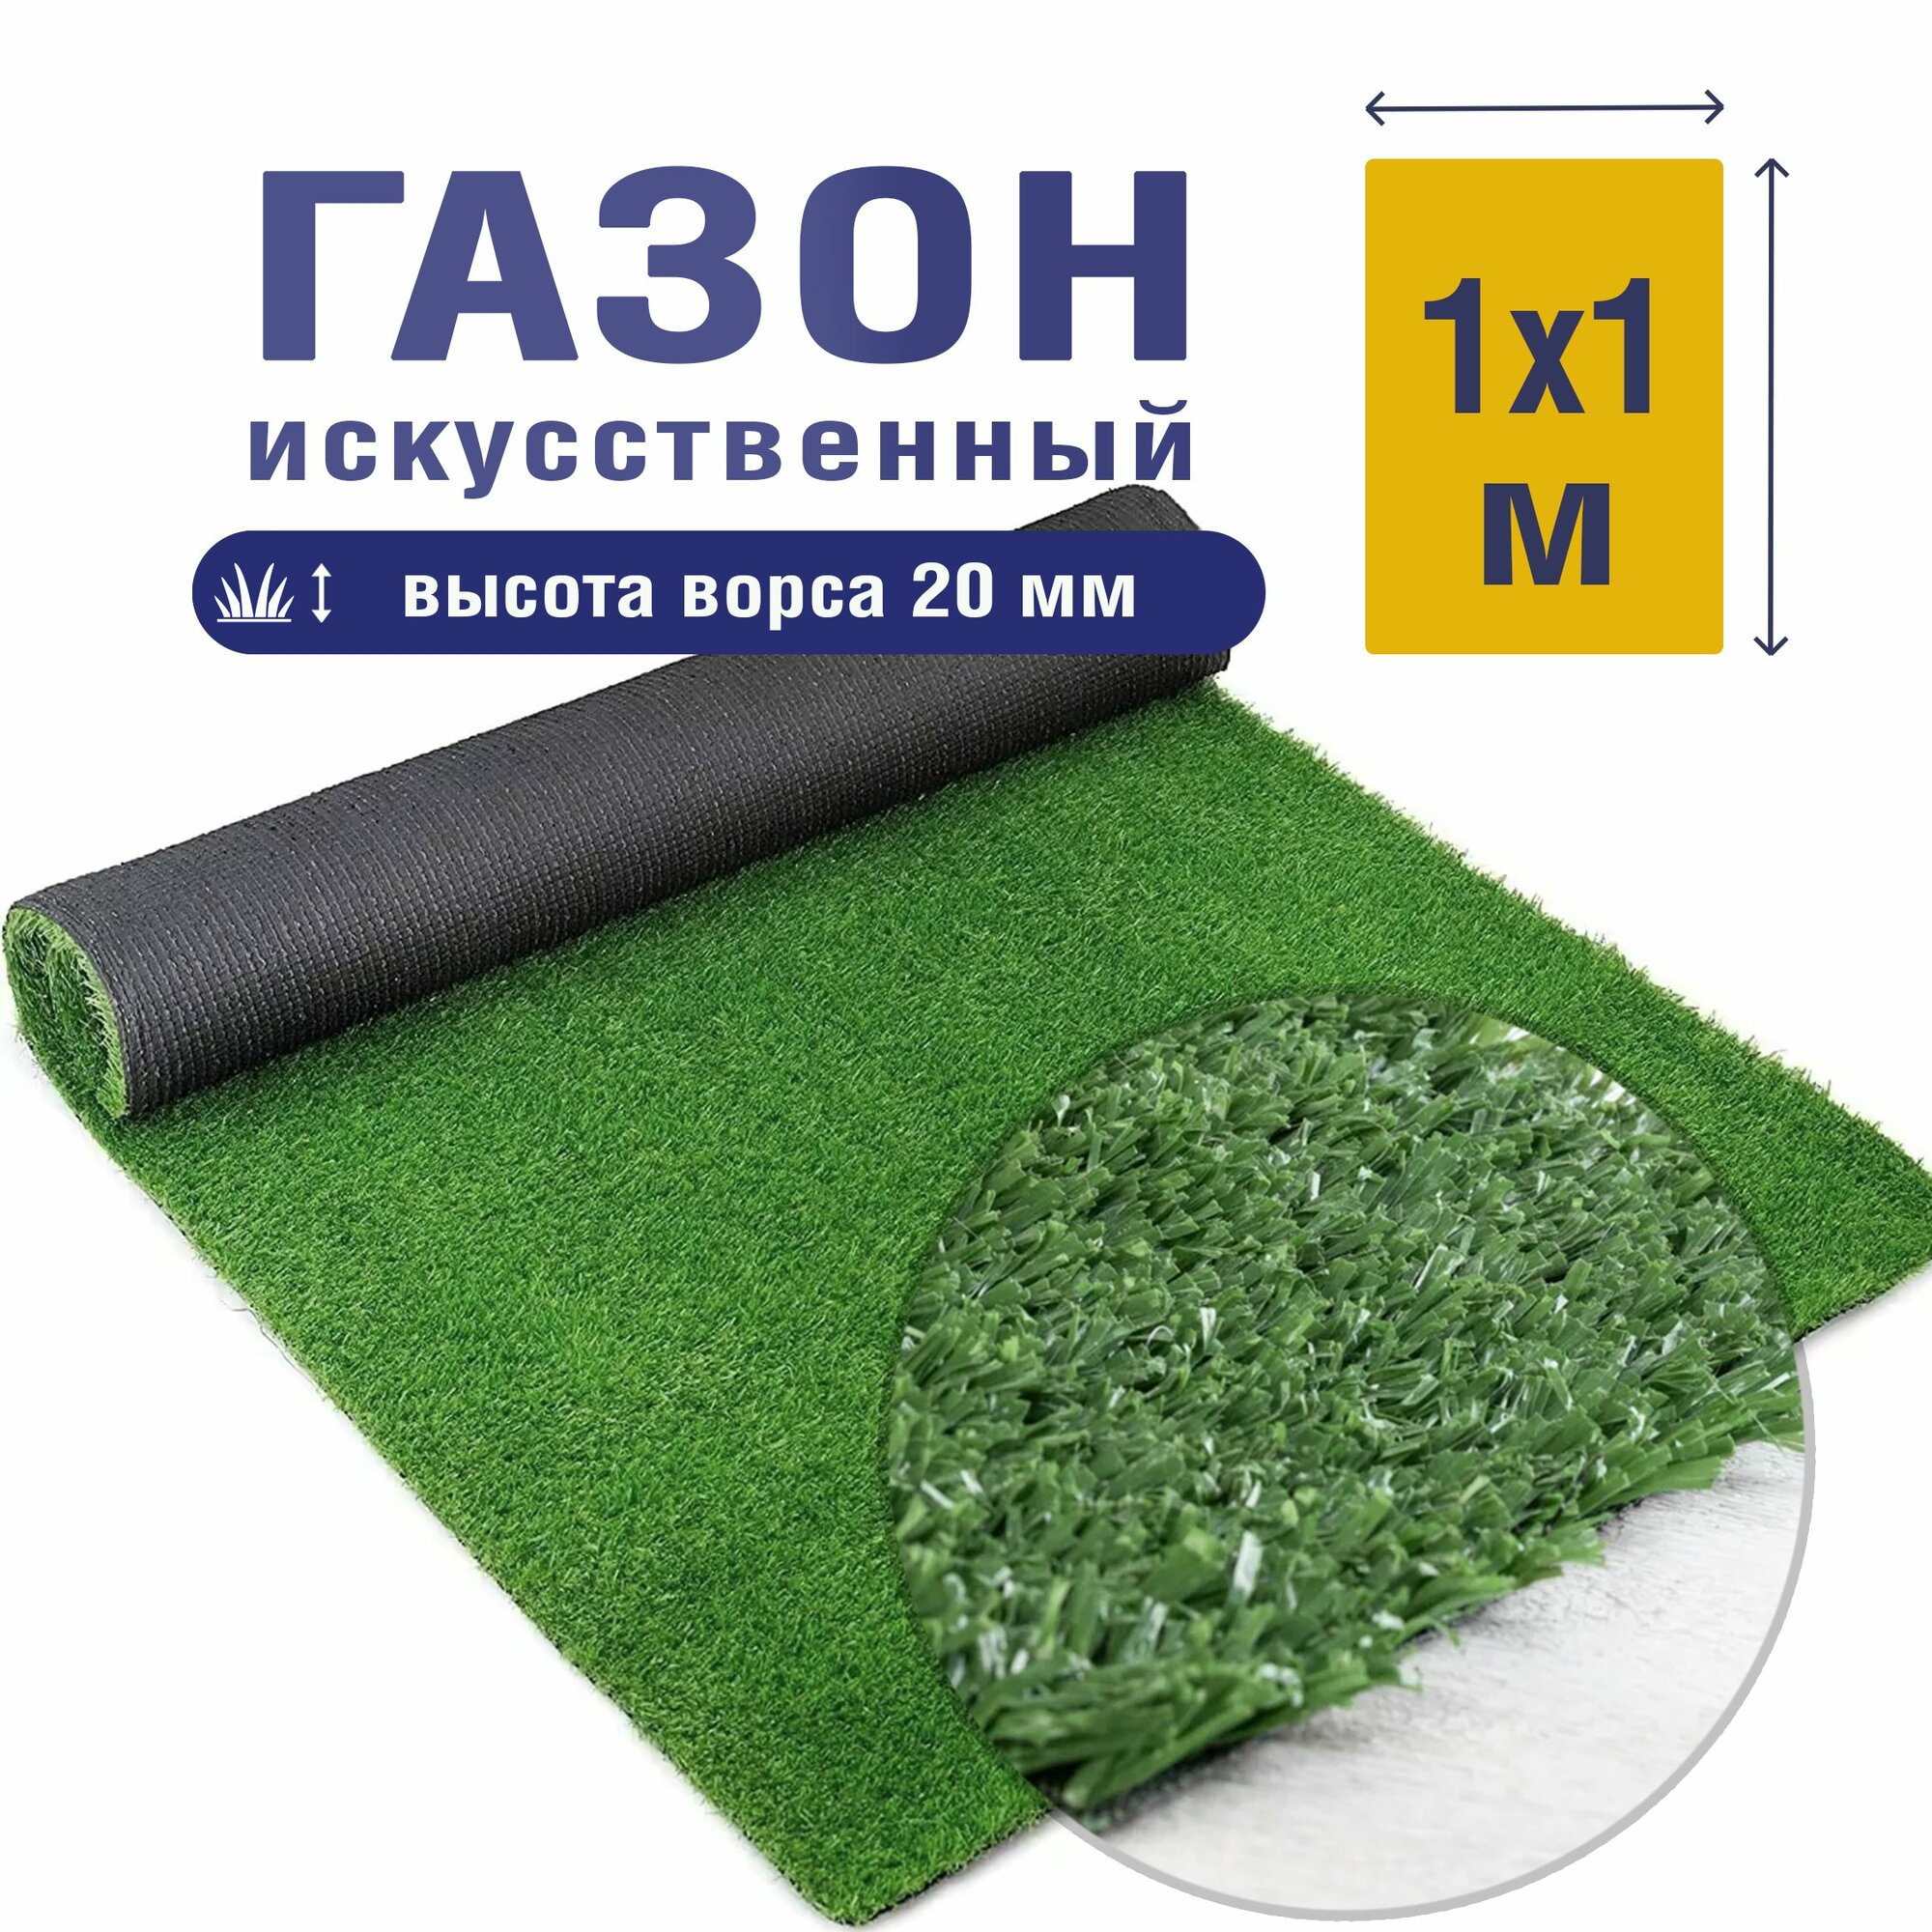 Трава искусственная зеленая 20 мм мультиспорт 2м*1м / искусственный газон / рулонный газон